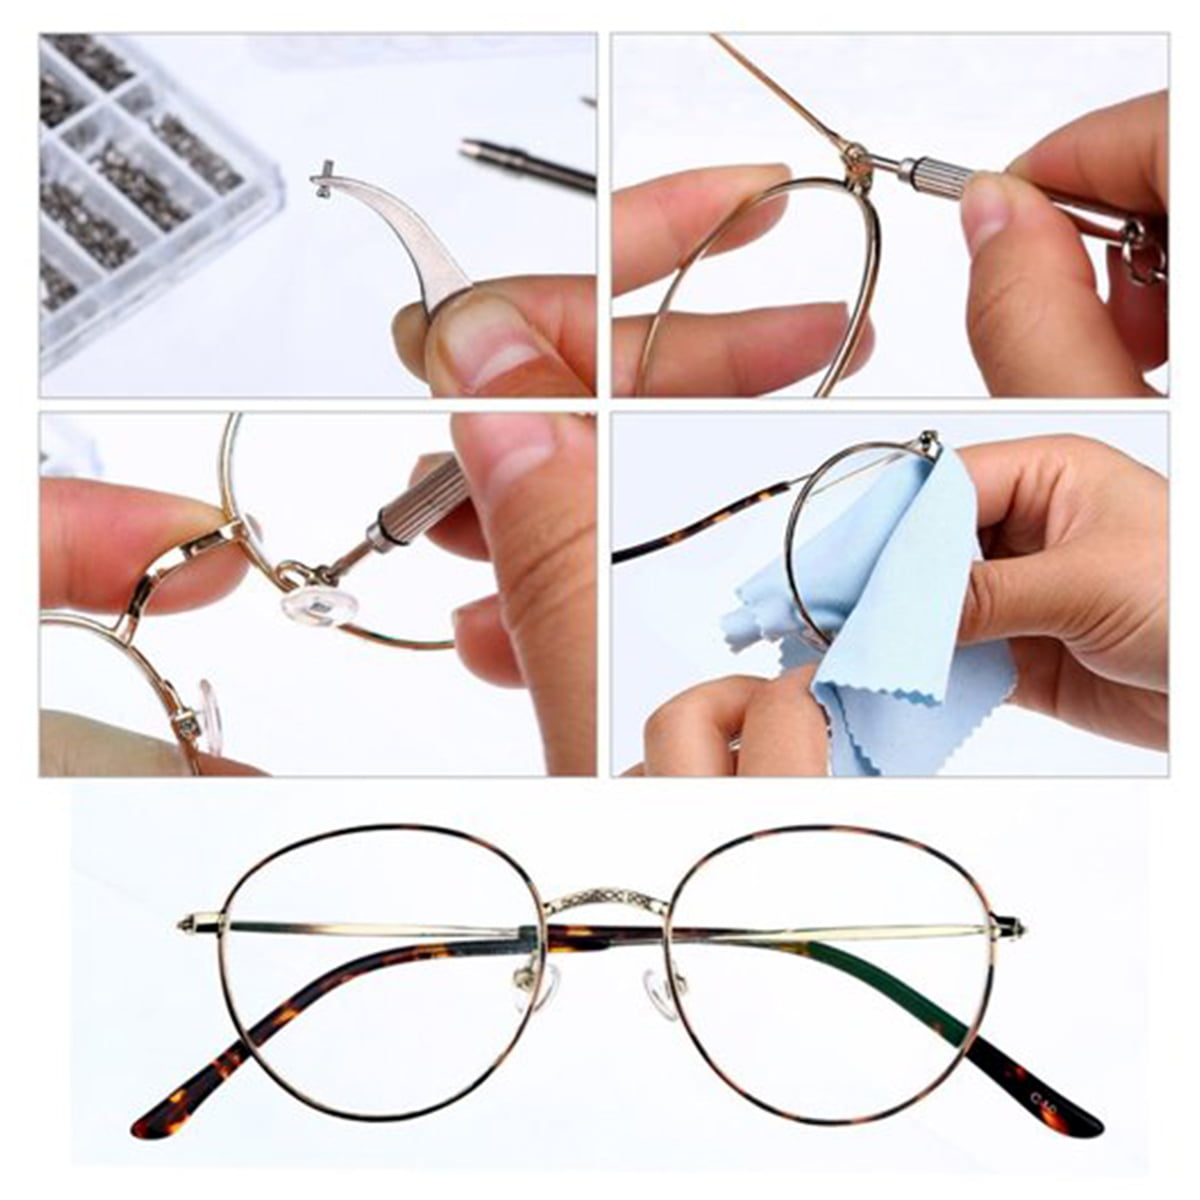 Kabuer Eyeglasses Repair Kit Glasses Repair Kit Stainless Steel Screws and  Nose Pads with Micro Screwdriver Tweezer for Watch 